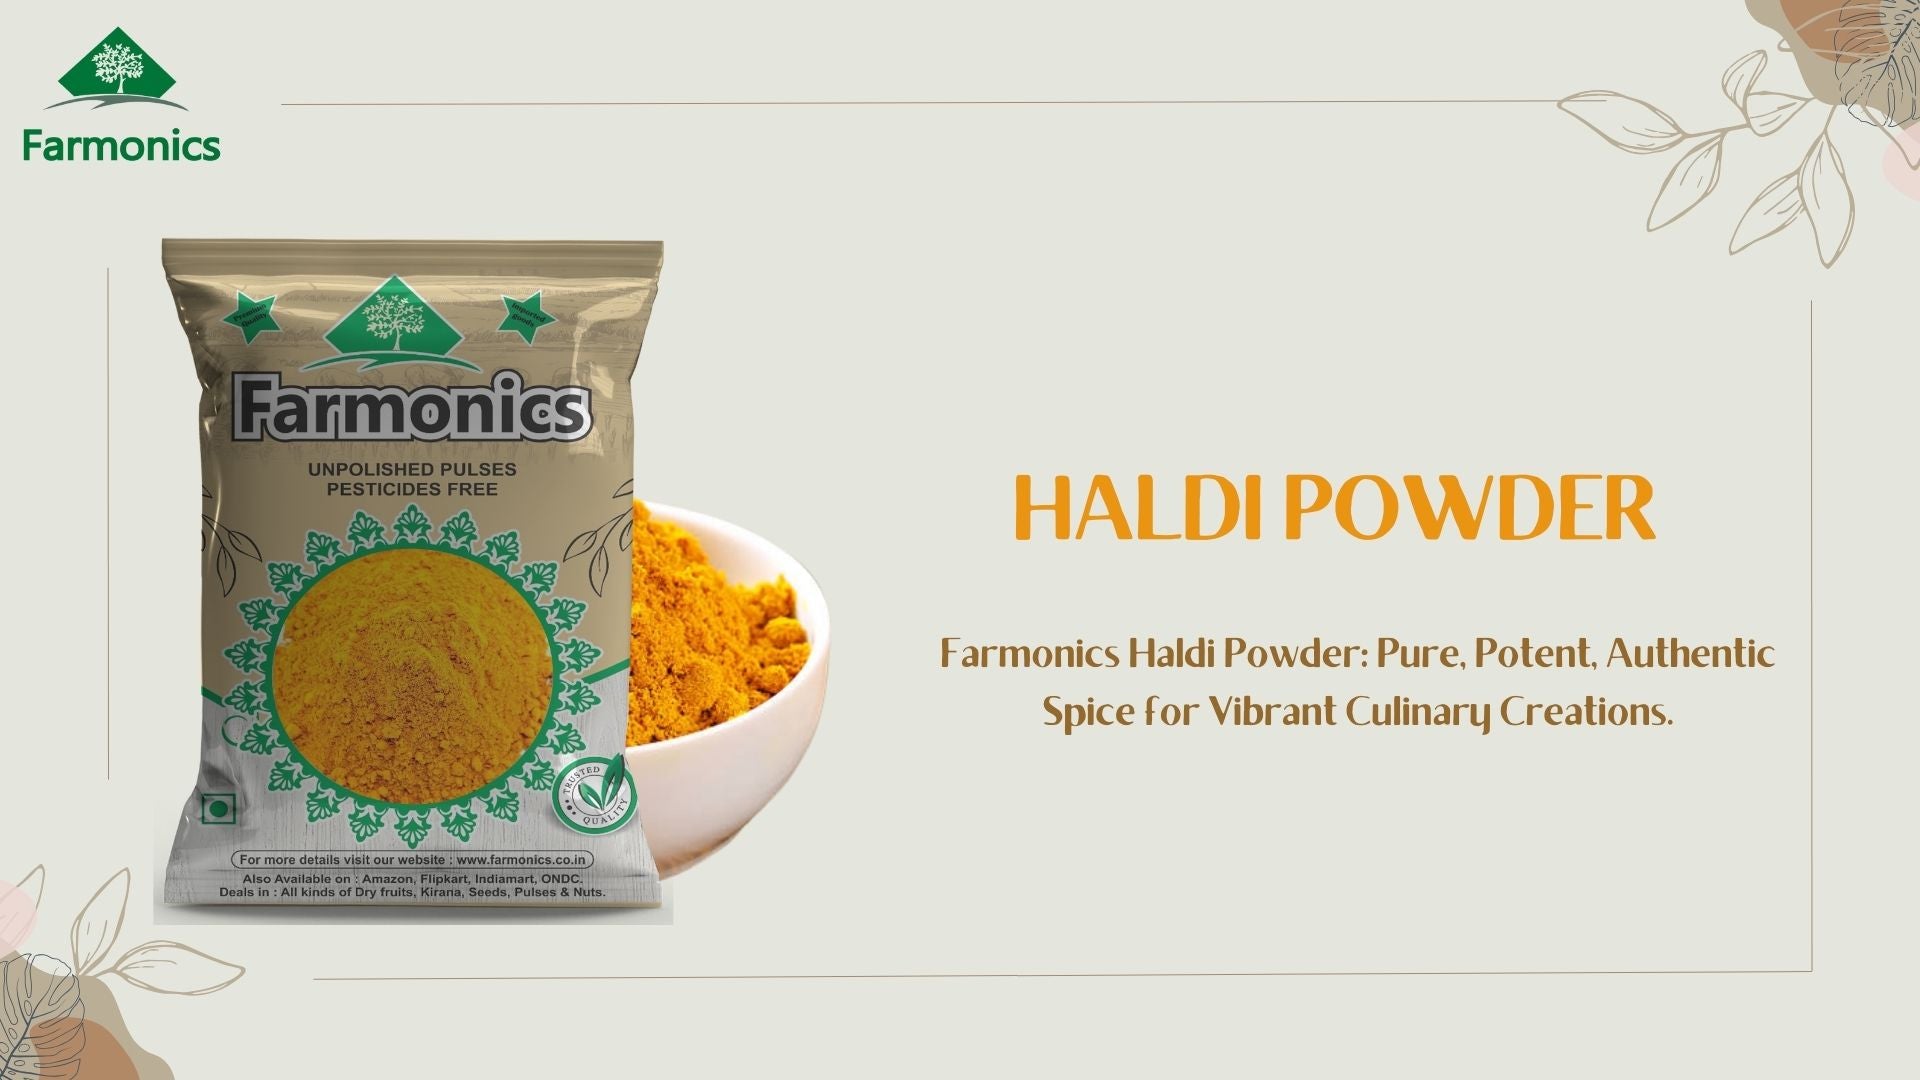 Farmoics Haldi Powder: Pure, Potent, aunthentic spice for vibrant culinary creations.